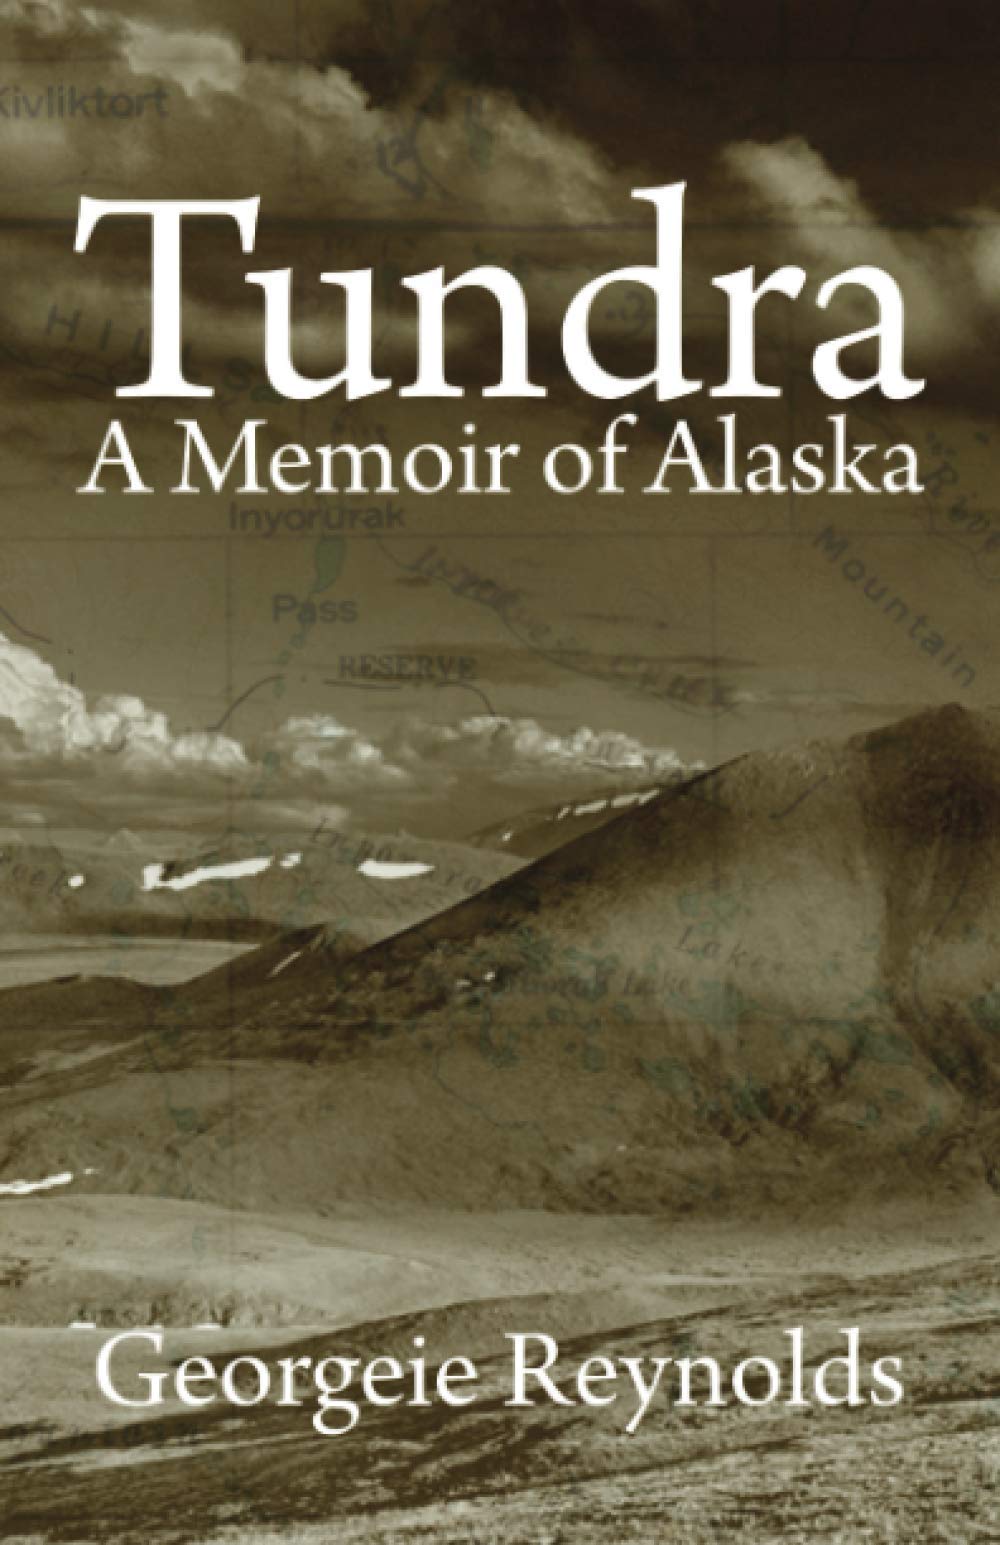 TUNDRA: A MEMOIR OF ALASKA